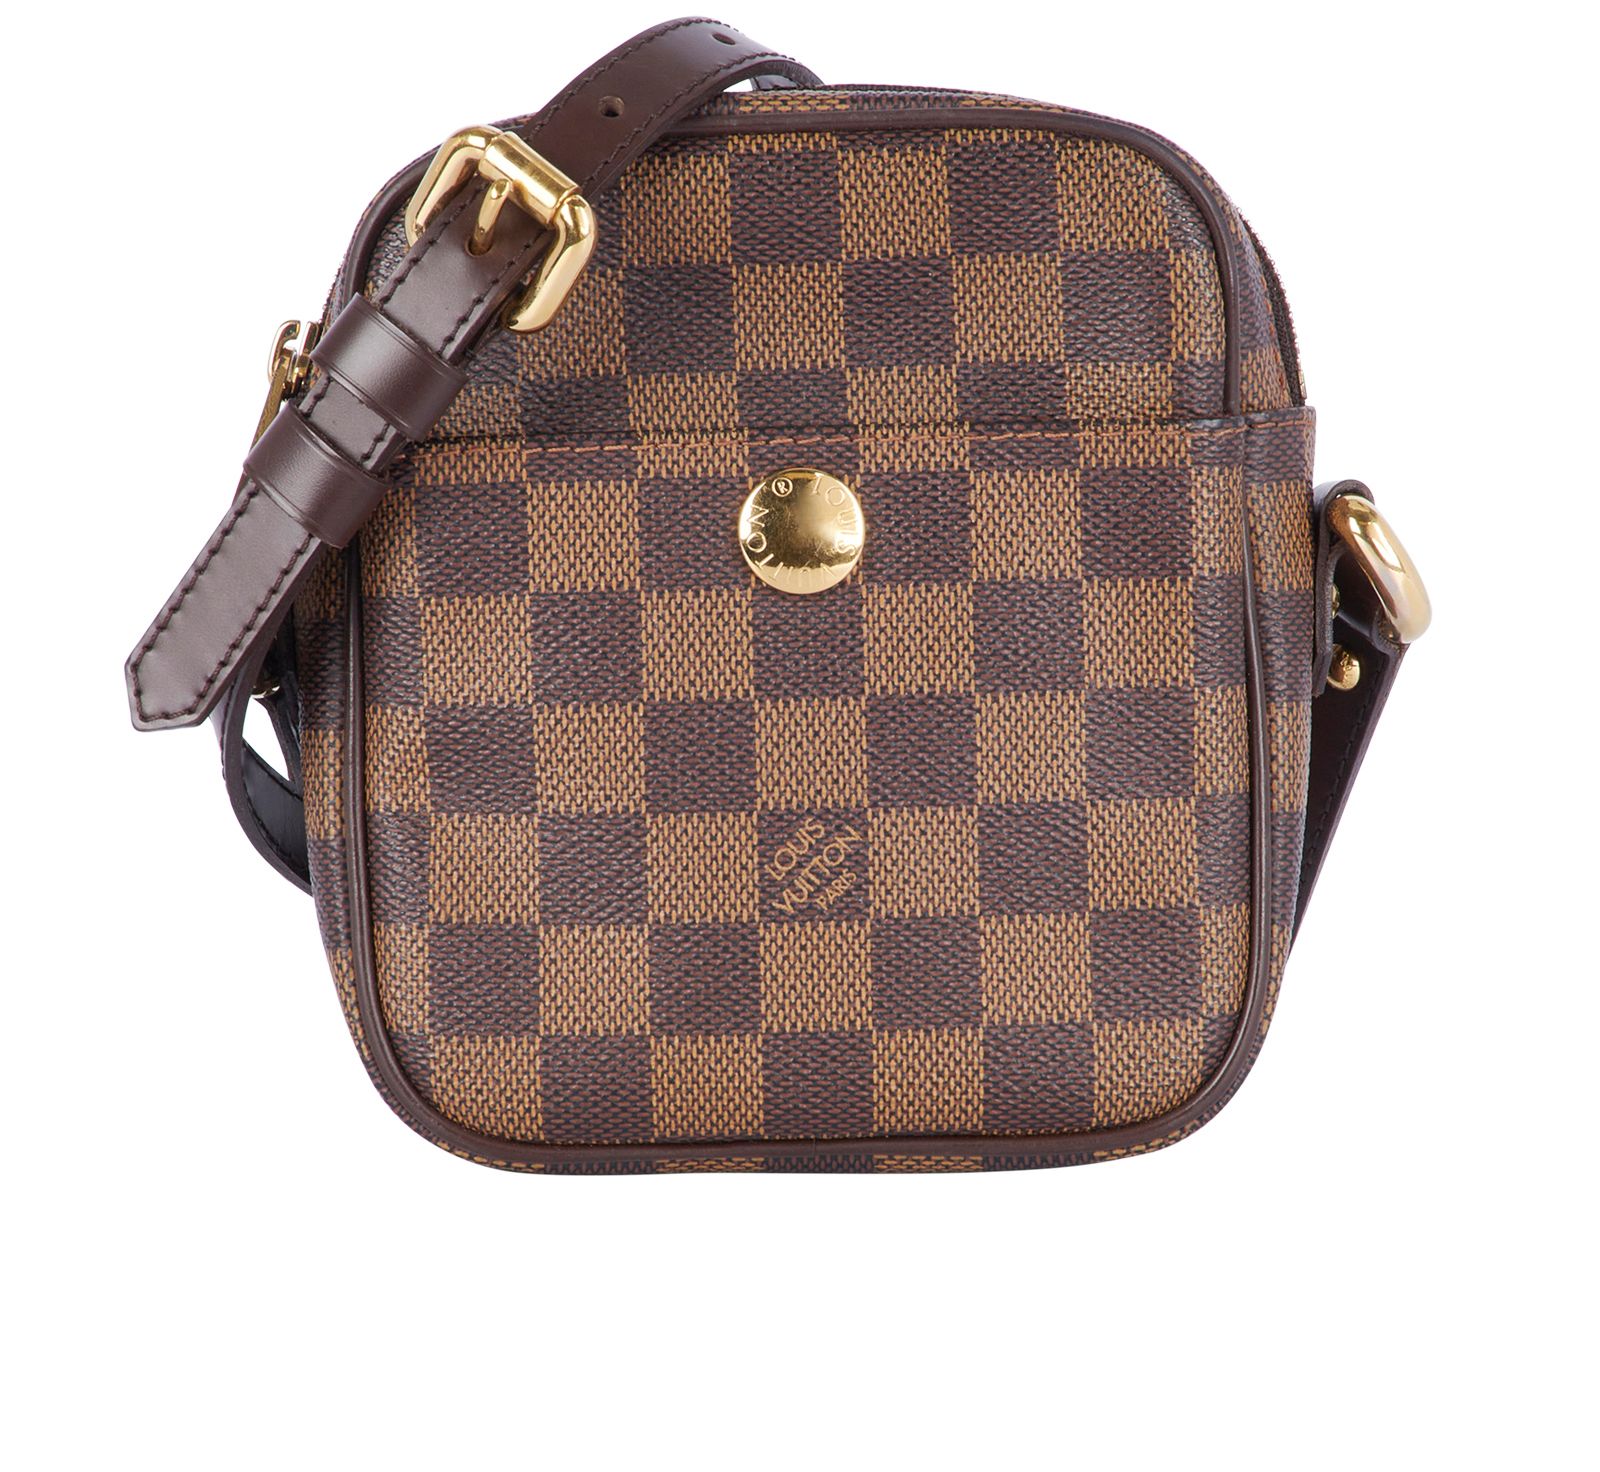 Louis Vuitton Rift Shoulder bag 360360